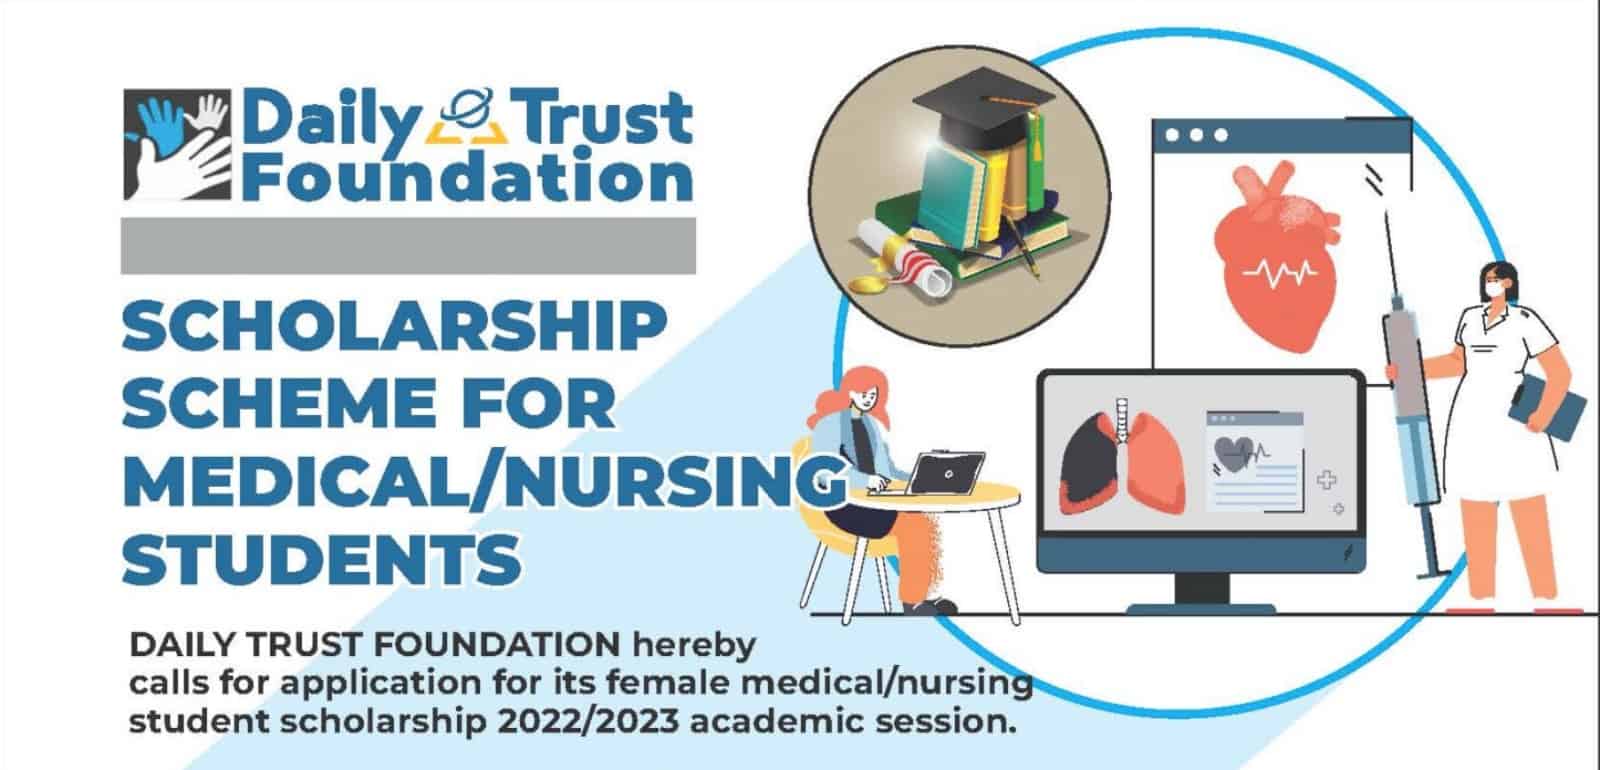 Daily Trust Foundation Scholarship